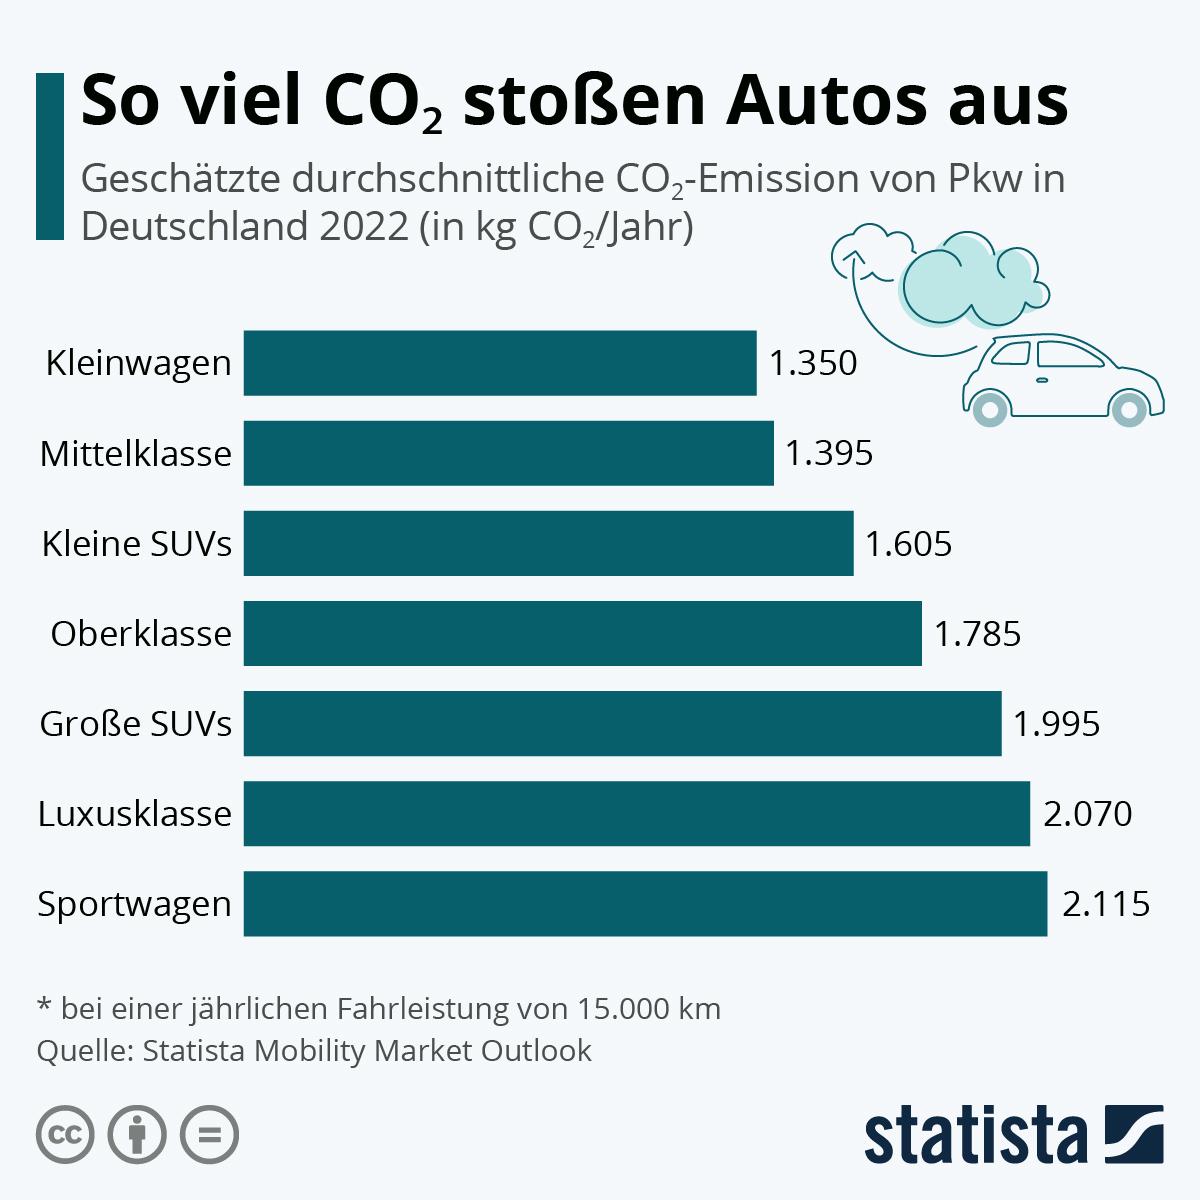 Statista_CO2 Ausstoss2022